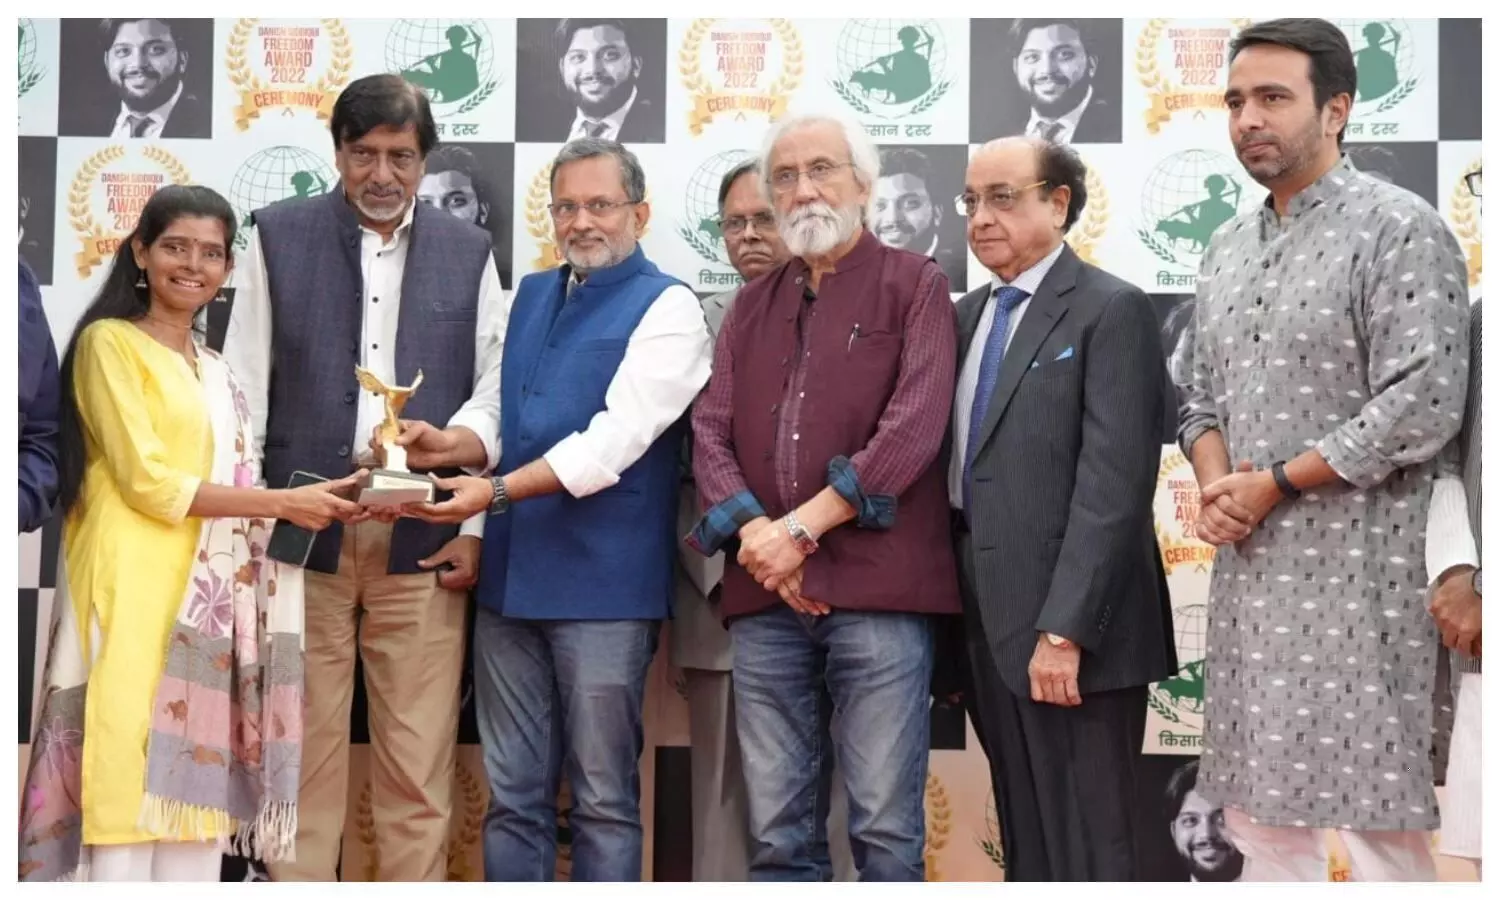 Danish Siddiqui Freedom Award organized in Delhi